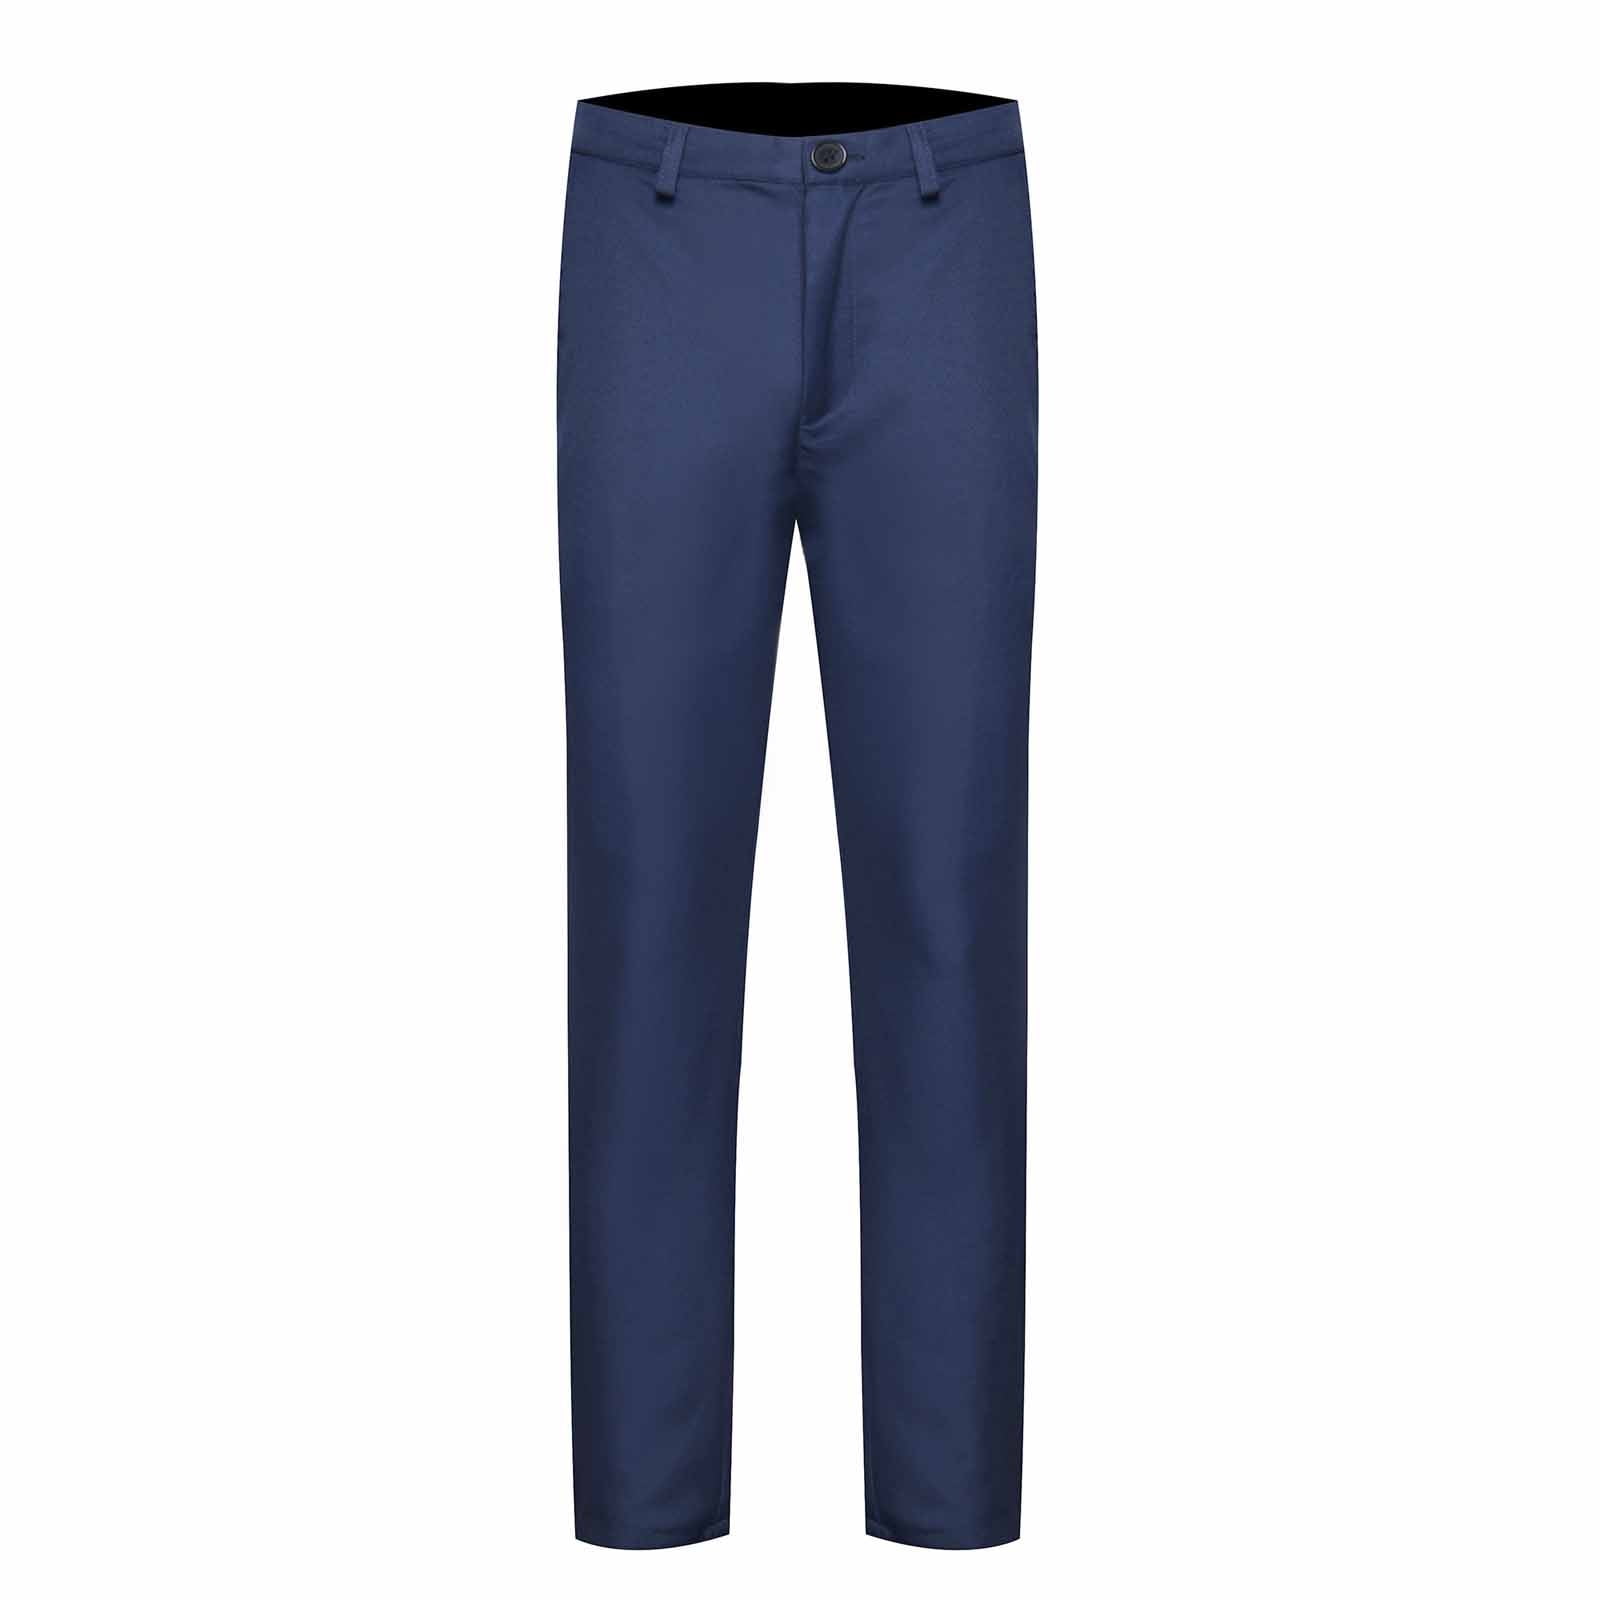 Dress Pants for Men Work Business Flat Front Pants Slim Fit Golf Pants  Basic Lightweight Trousers Everyday Suit Pant 